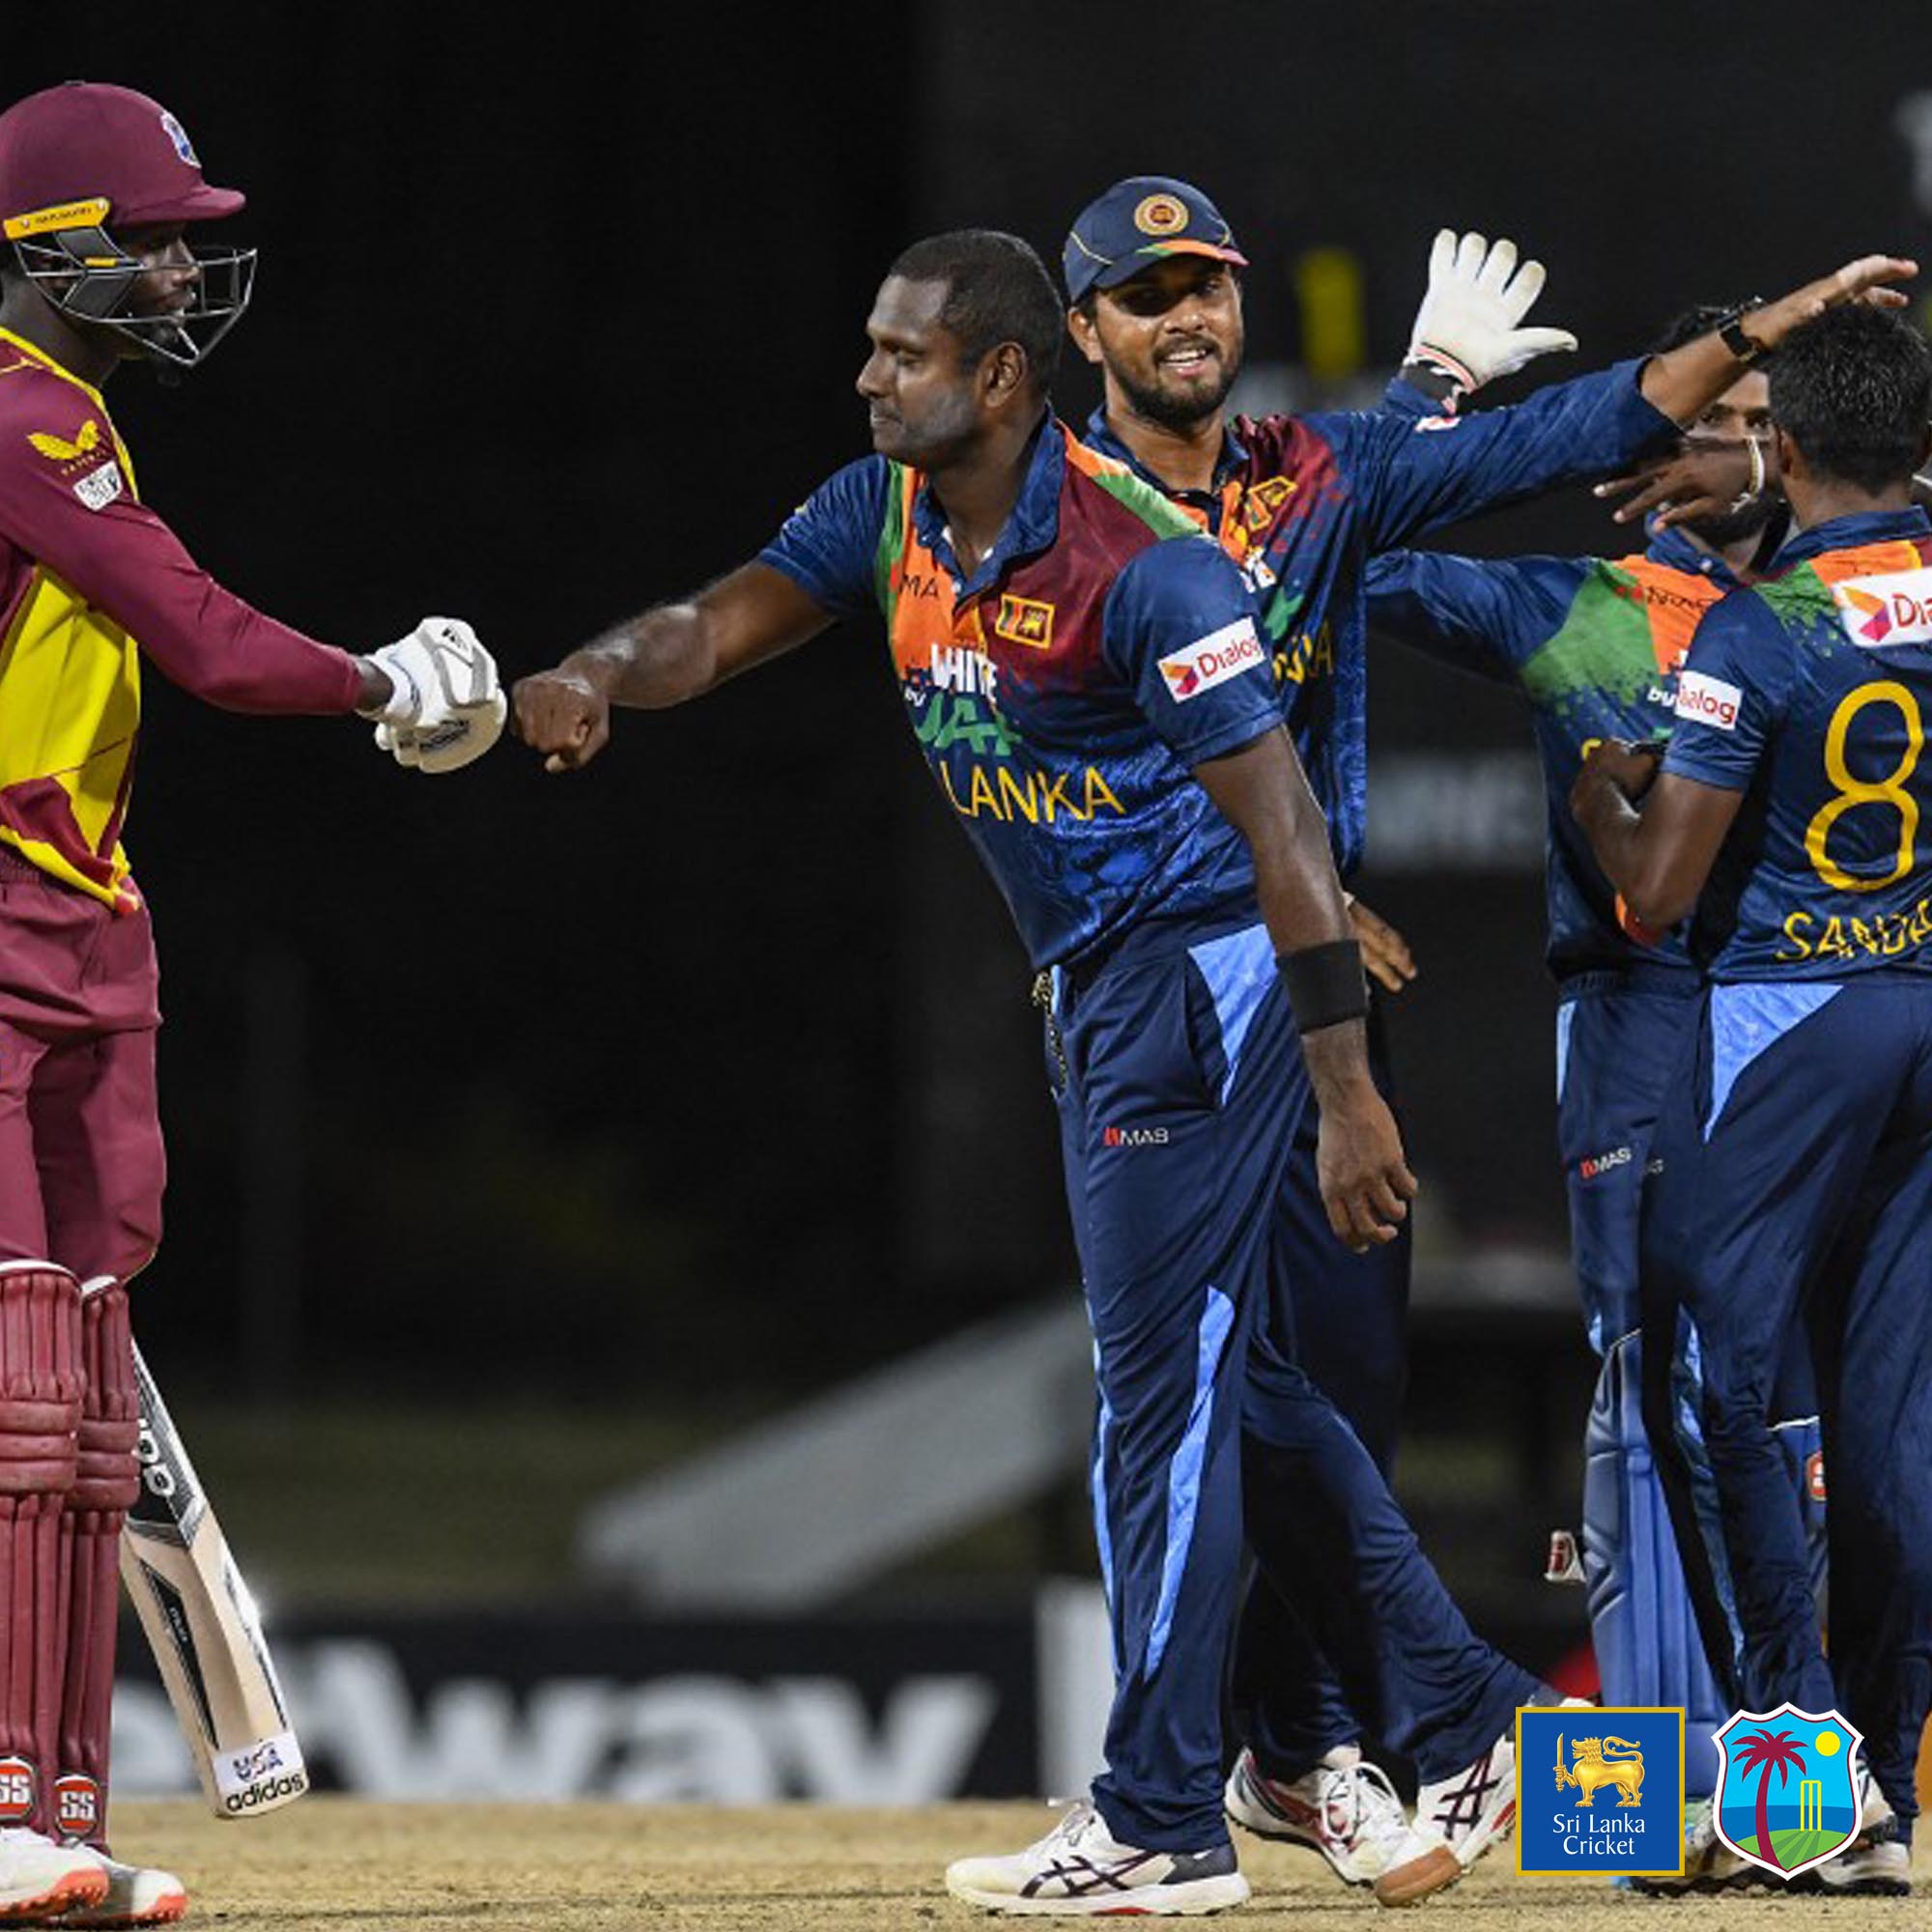 Sri Lanka hit back down West Indies by 43 on Hasaranga’s 3/17 and Sandakan’s 3/10 after Gunathilaka (56) and Nissanka (37) fire upfront